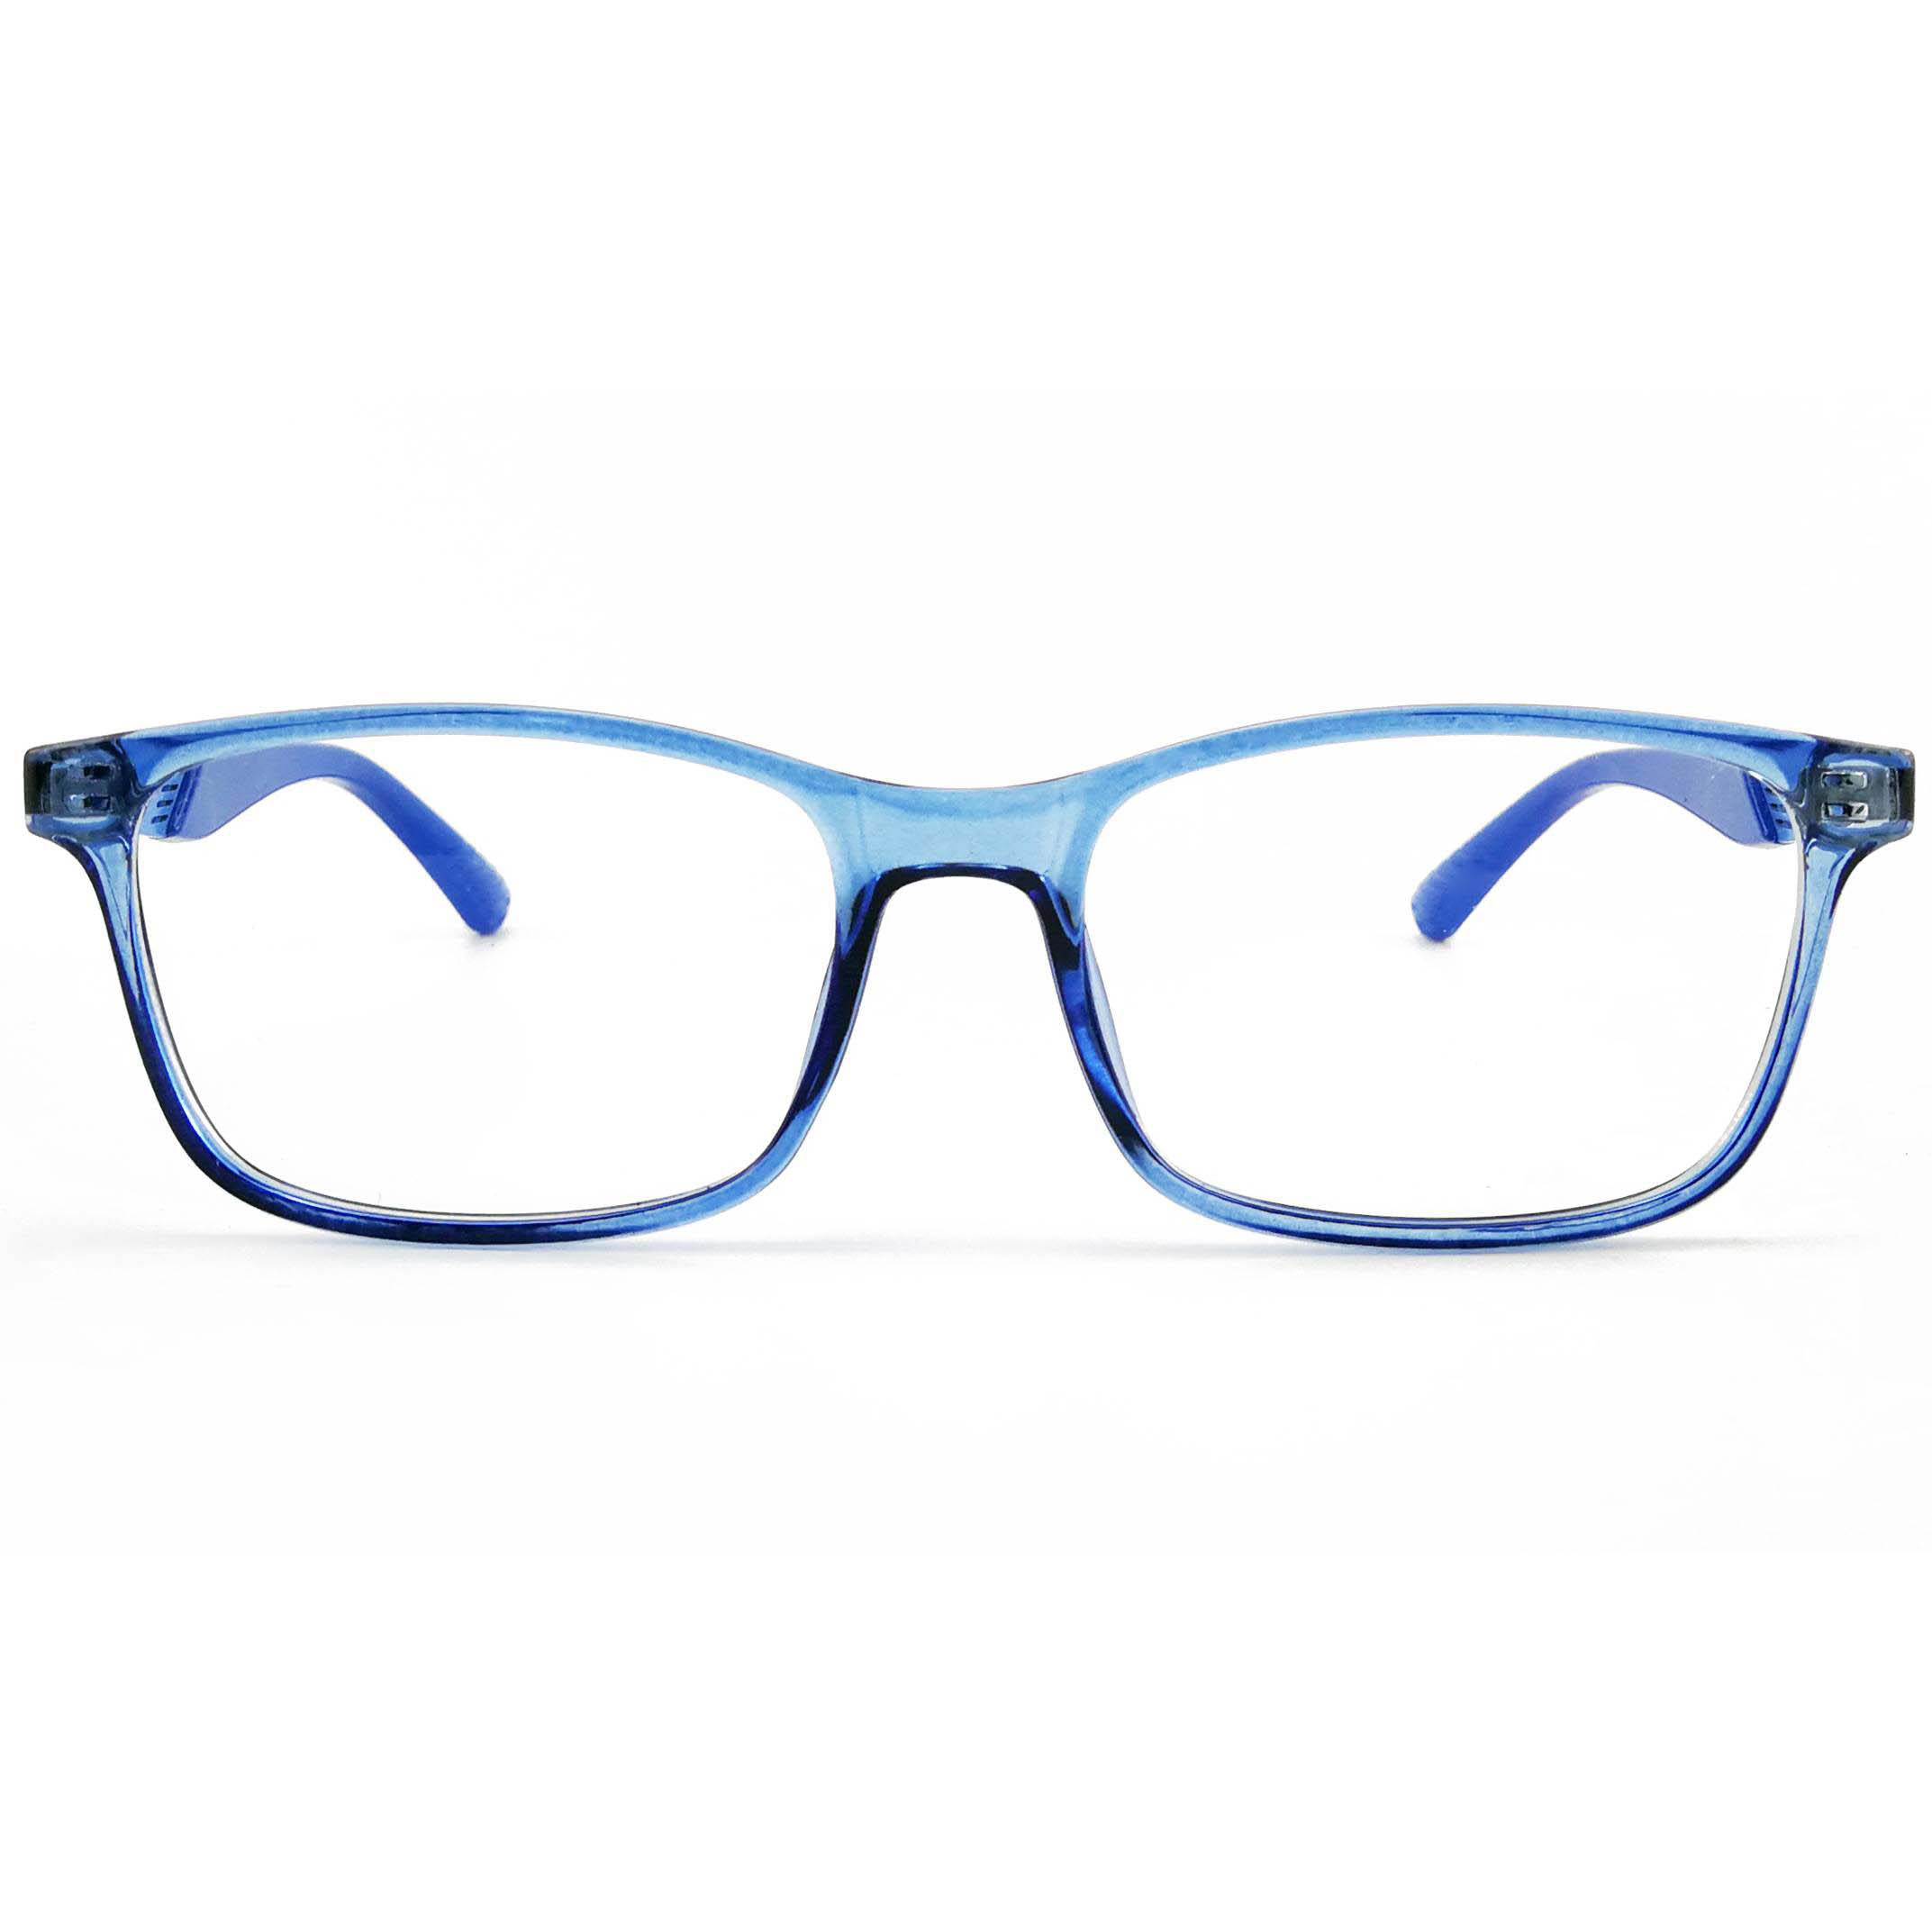 Eugenia optical glasses wholesale overseas market For optical frame glasses-1